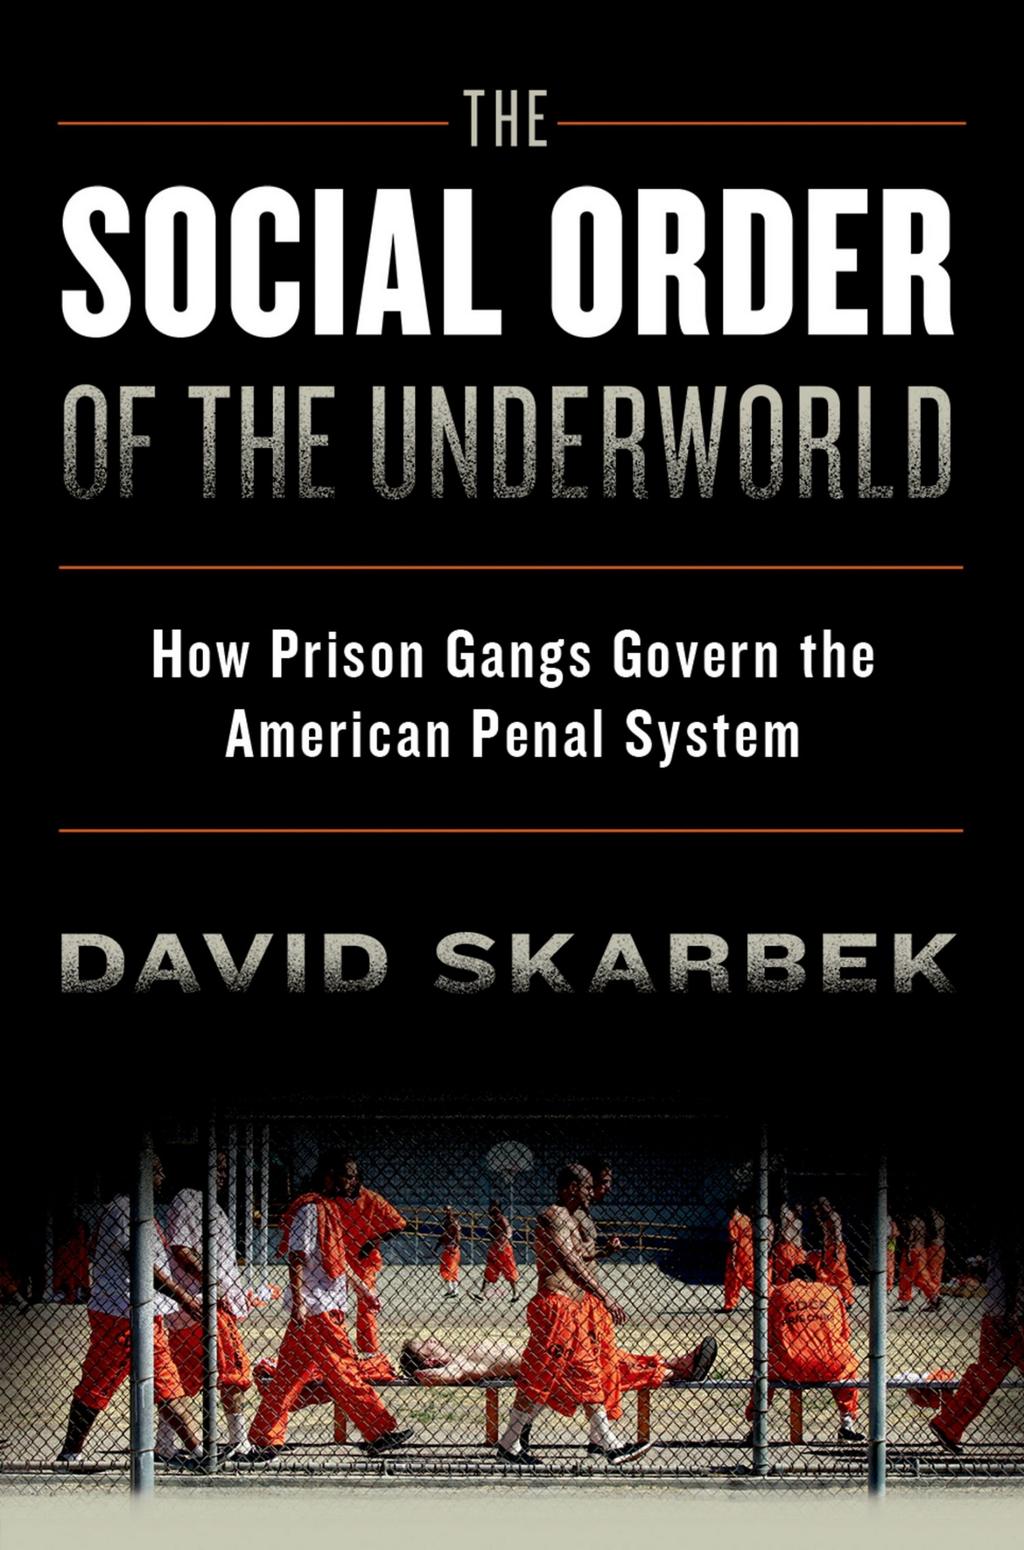 The Social Order of the Underworld by David Skarbek